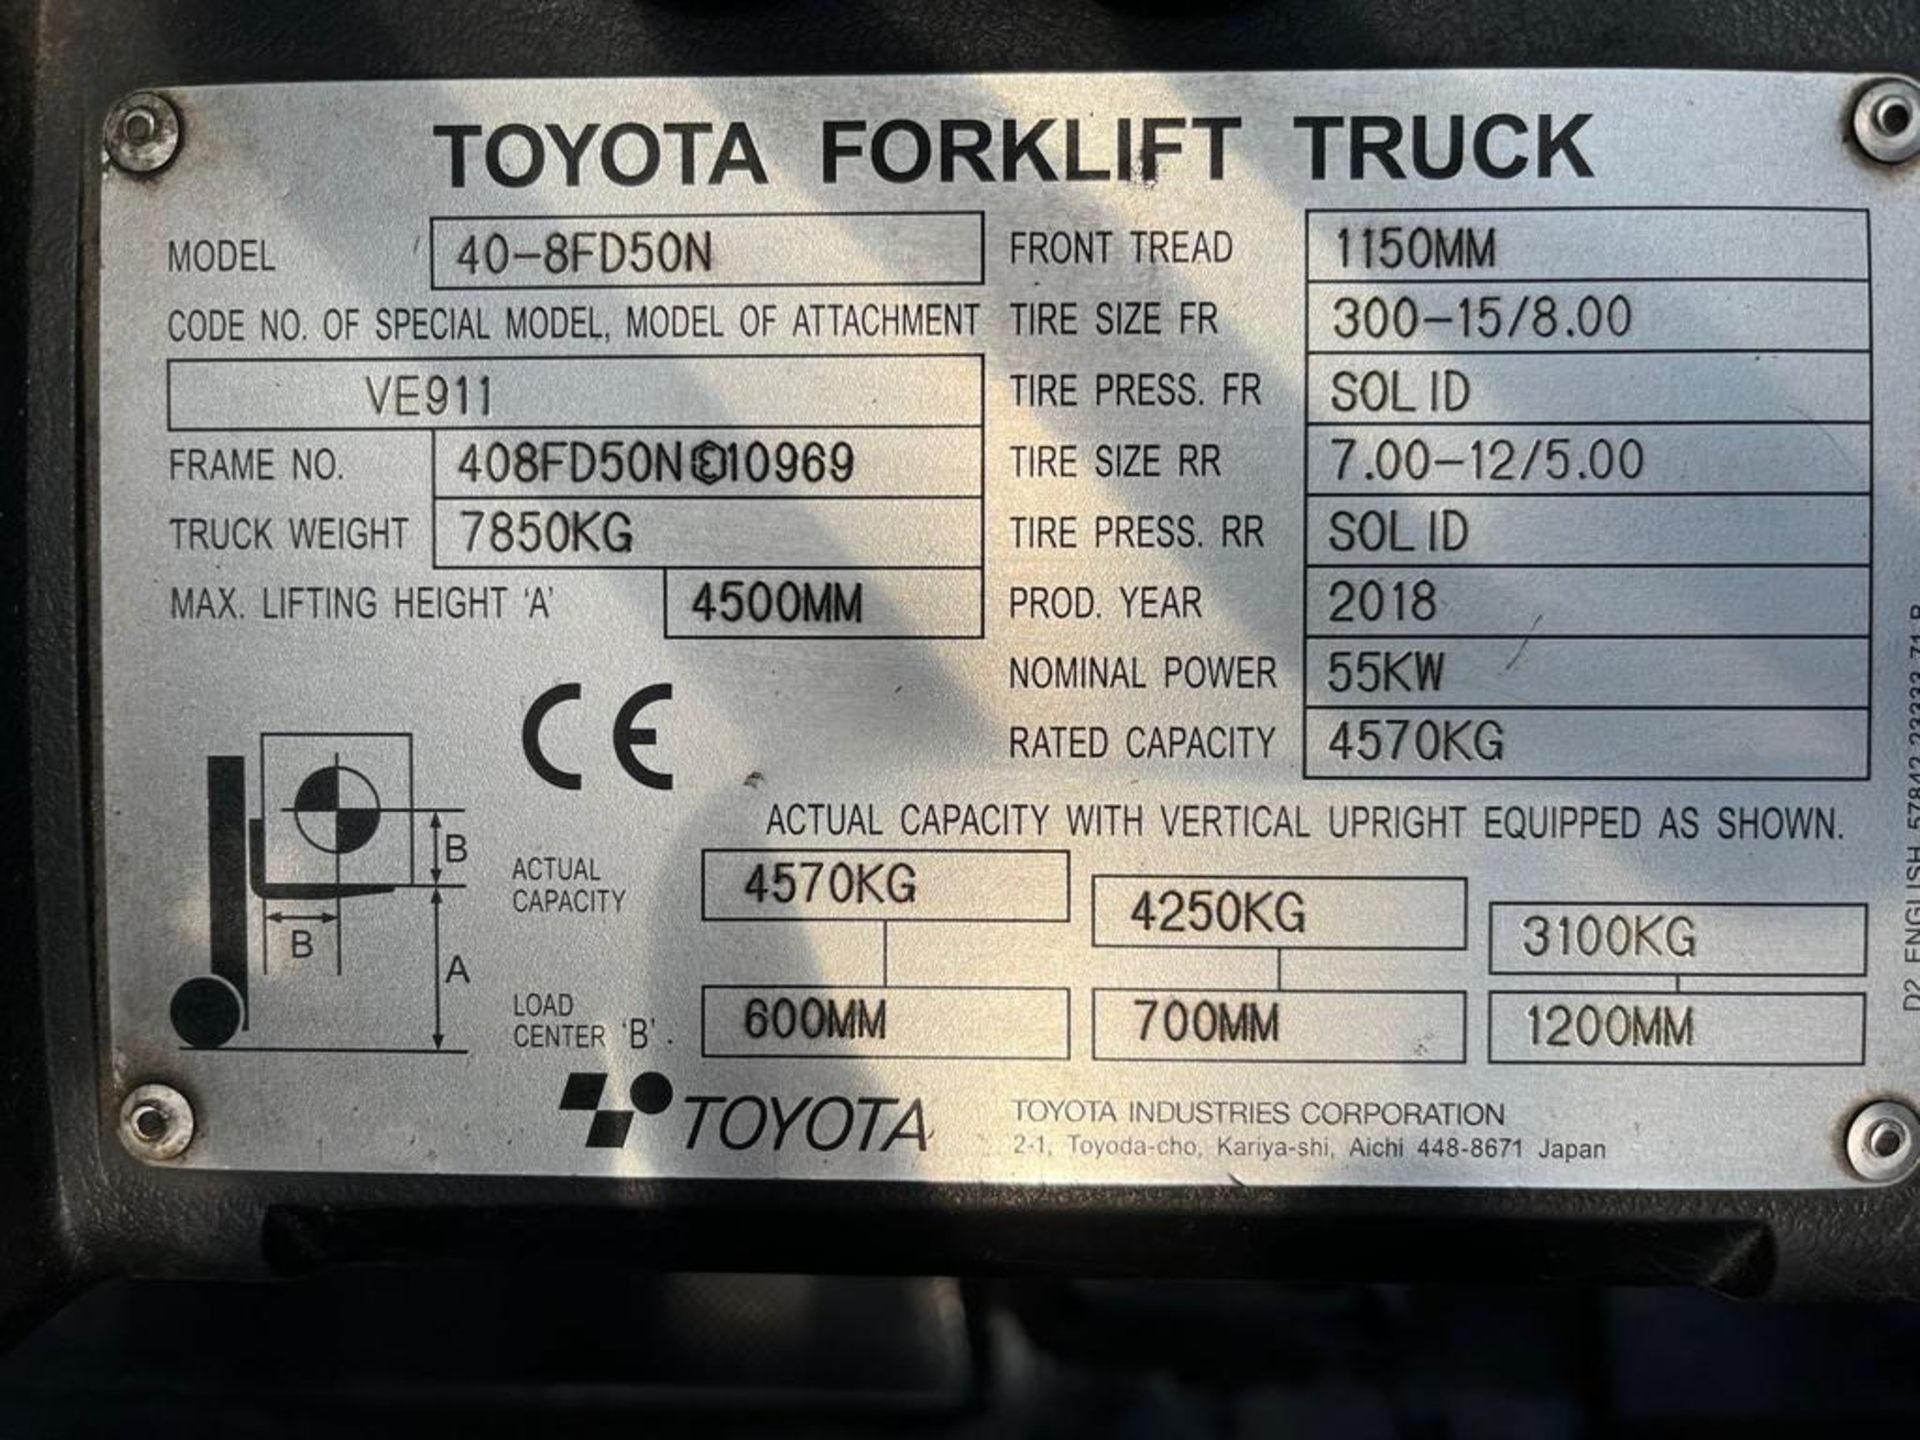 2018, TOYOTA (40-8FD50N) - 5 Tonne Diesel Forklift - Image 6 of 6